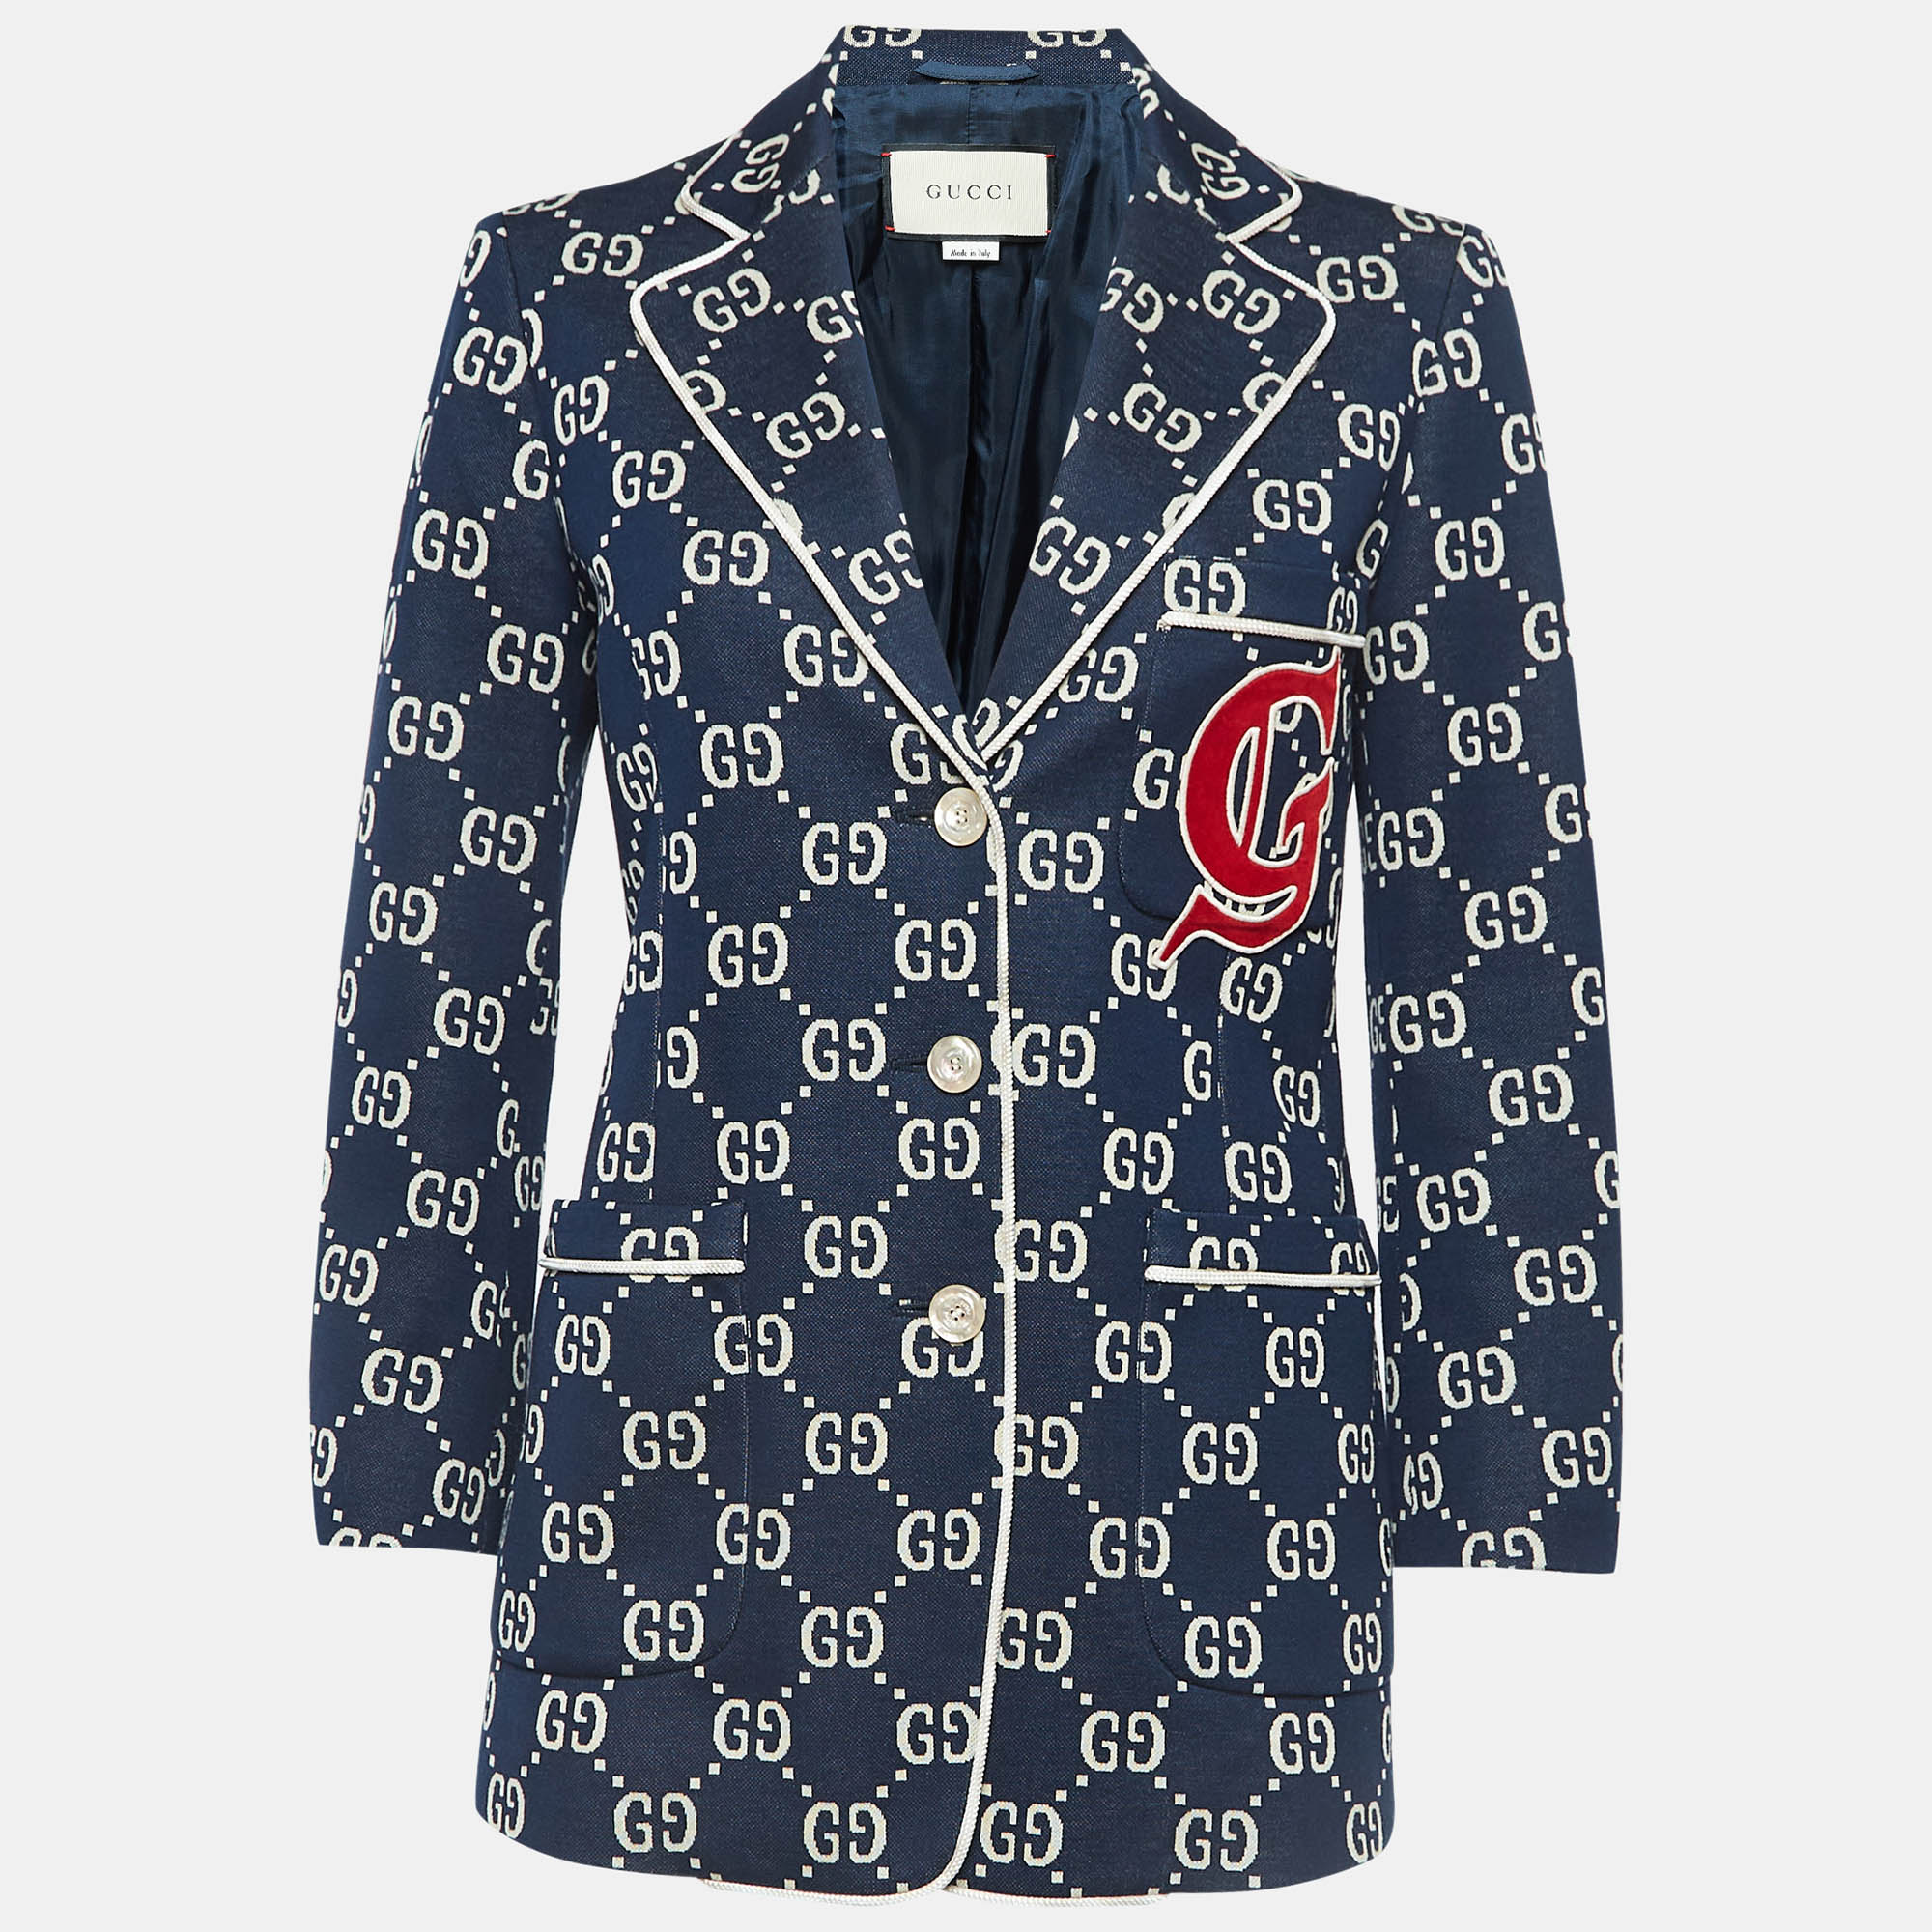 Gucci navy blue gg jacquard applique detail jersey jacket s